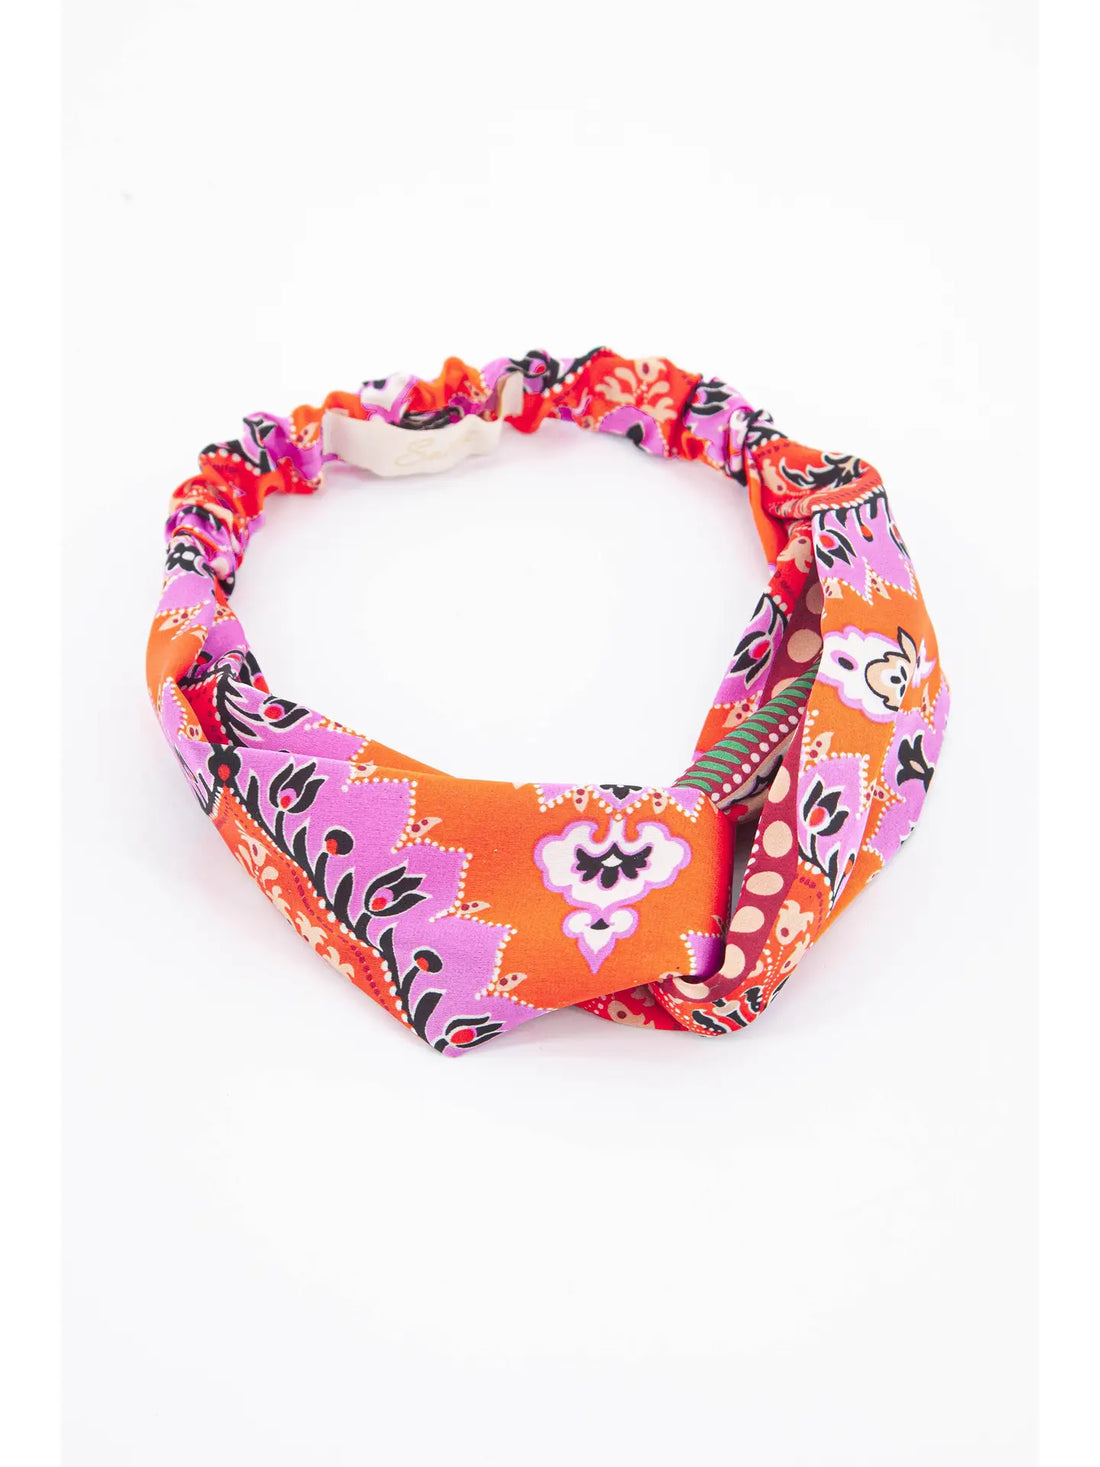 Sassie Textured Mandala Print Headband in Fuchsia Pink